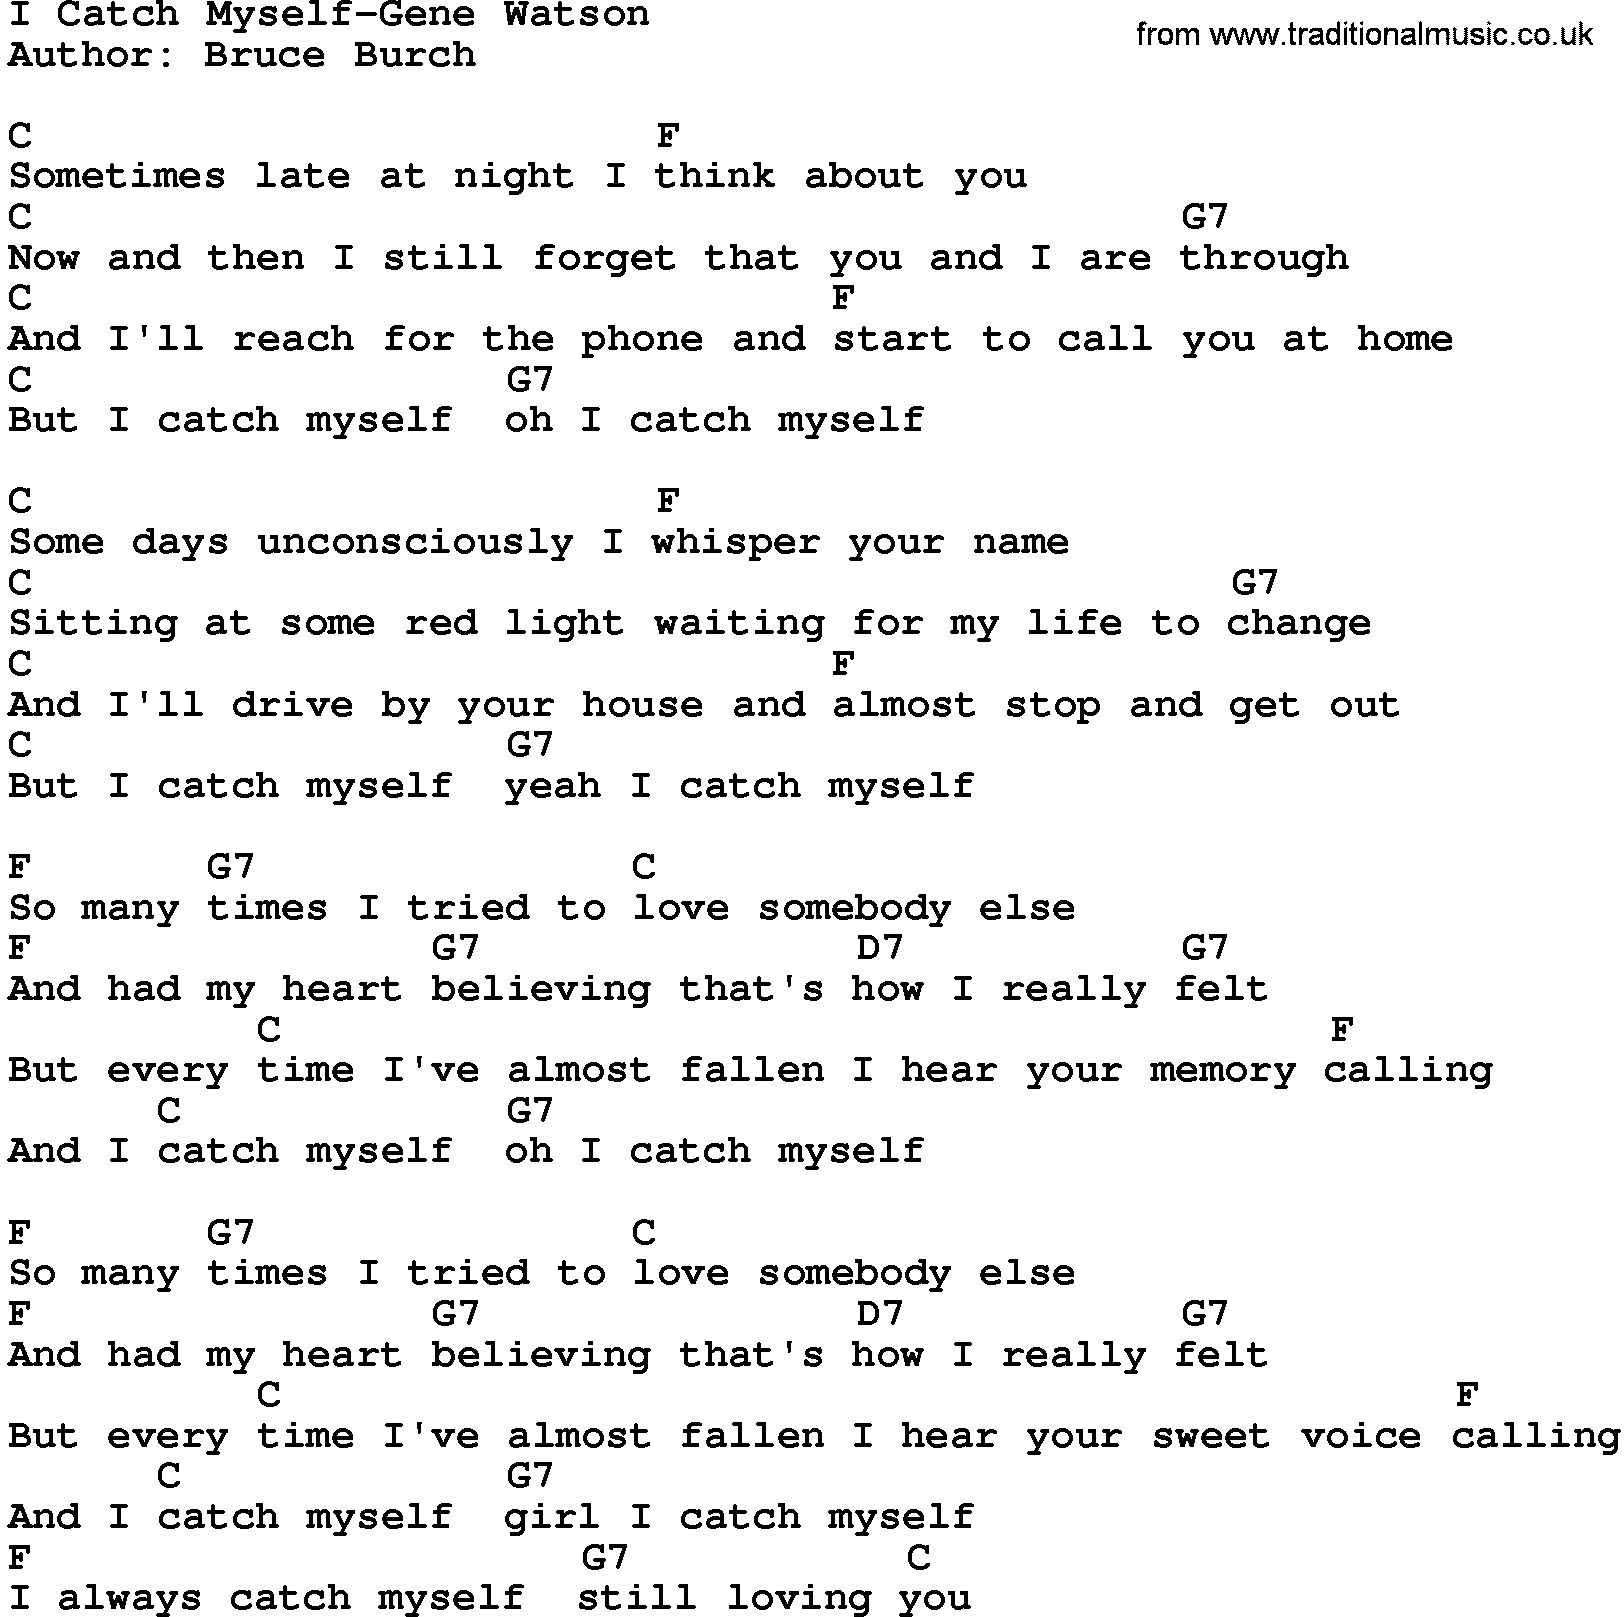 Country music song: I Catch Myself-Gene Watson lyrics and chords